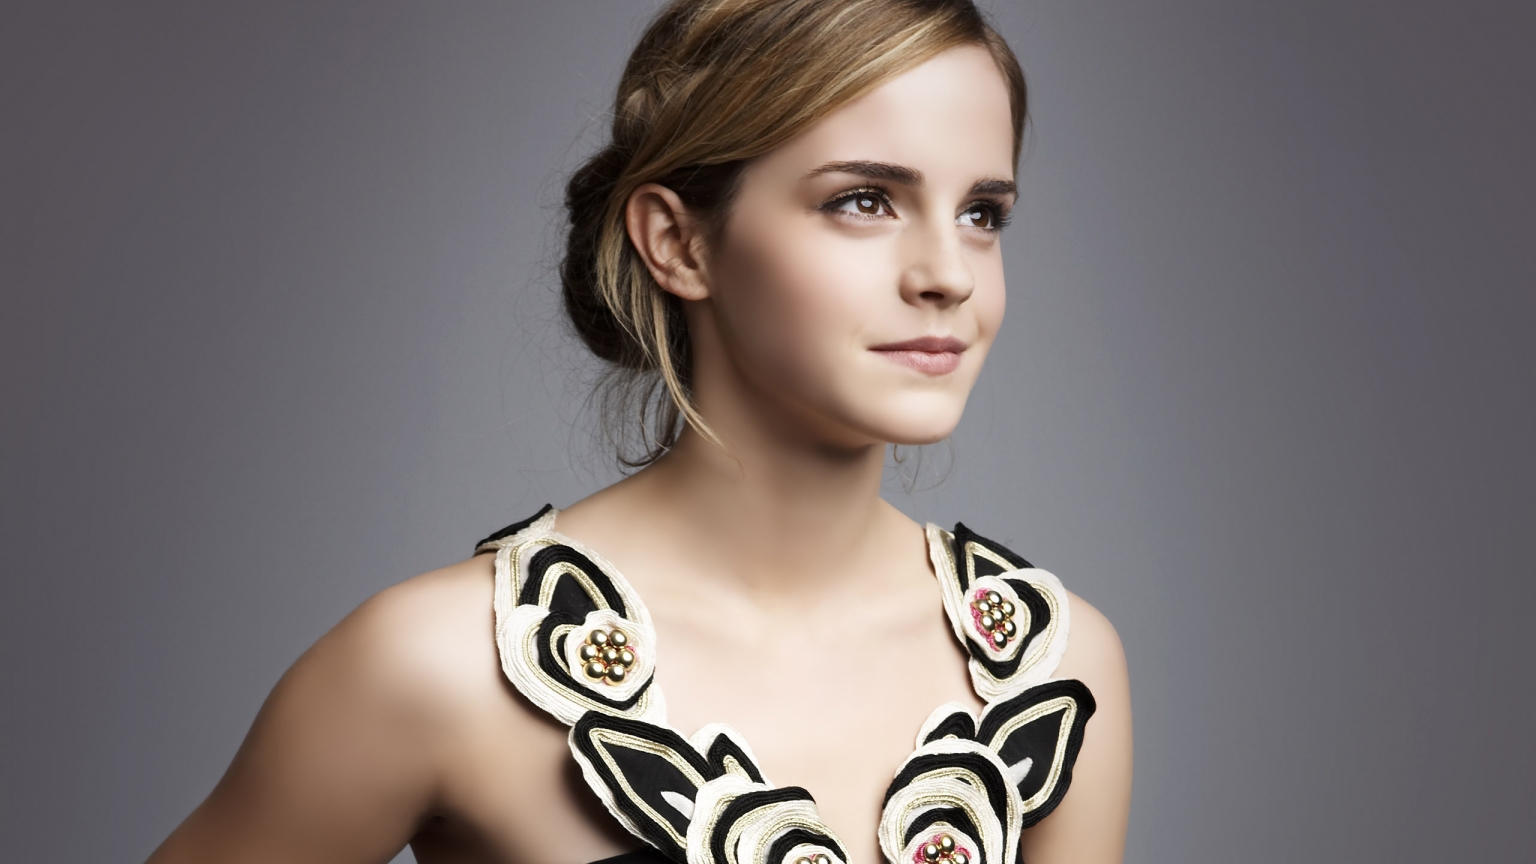 Emma Watson Smile for 1536 x 864 HDTV resolution